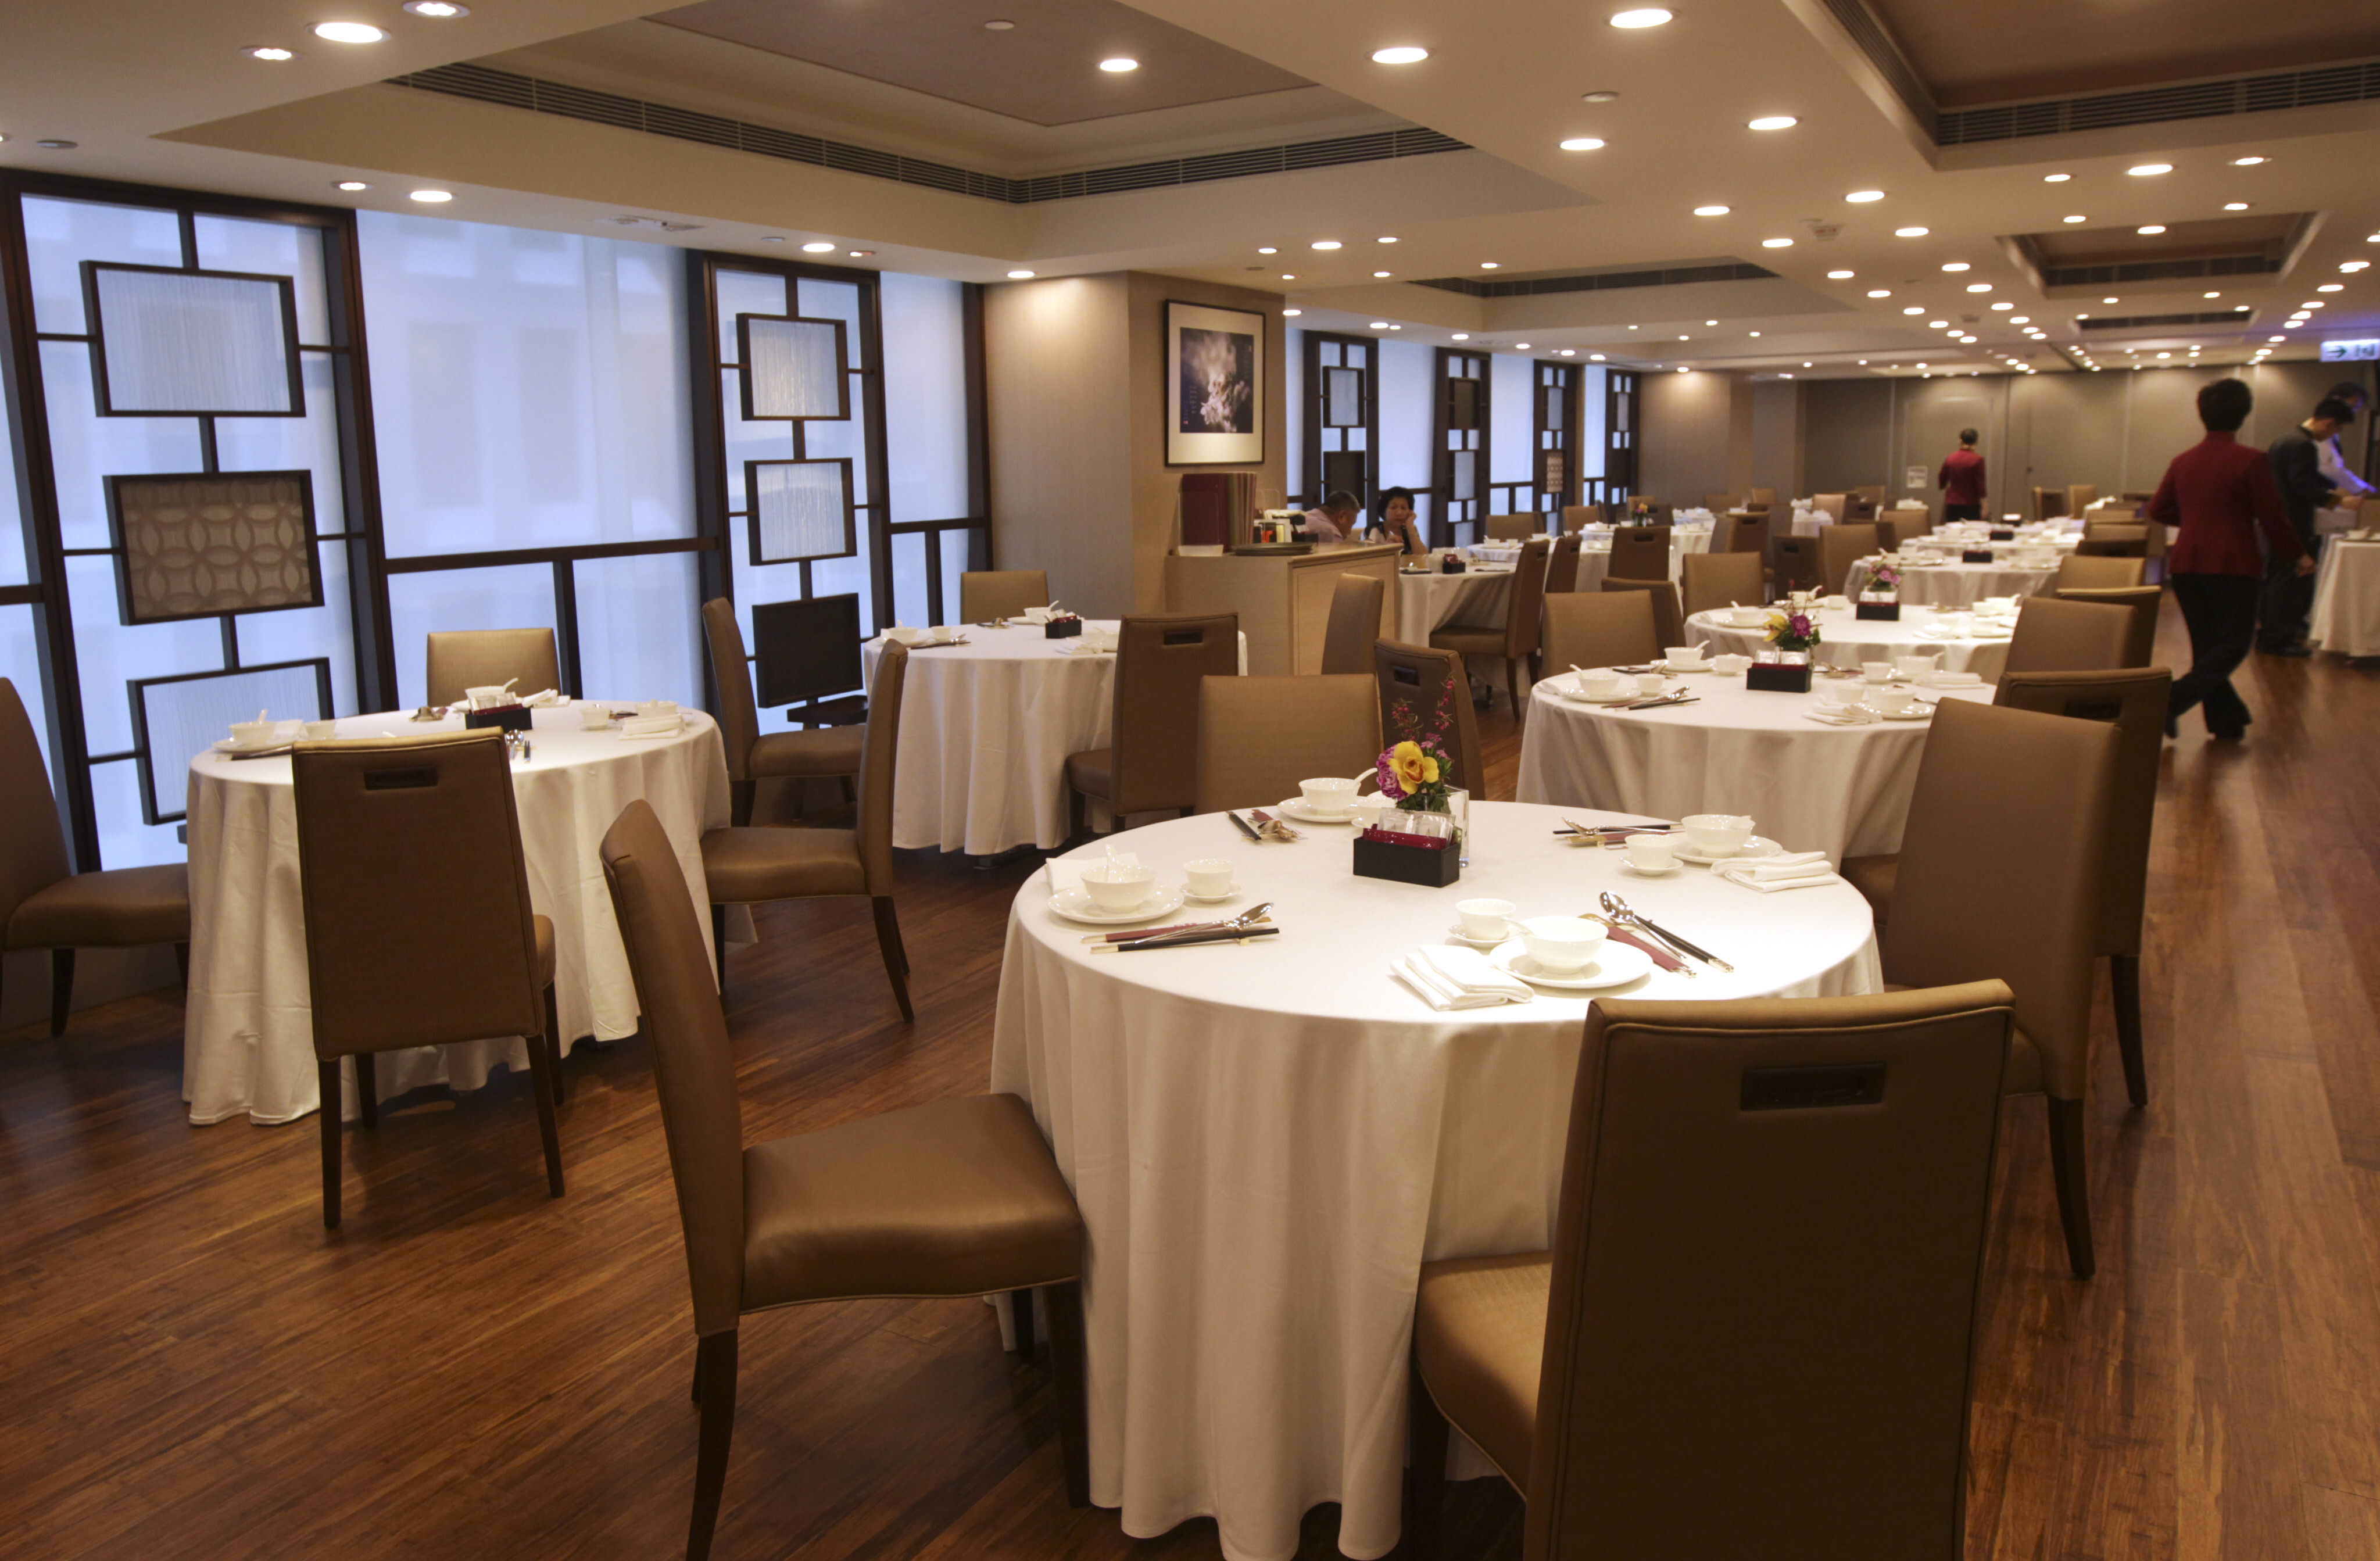 Seventh Son Restaurant raises the bar for Cantonese cuisine. Photo: SCMP